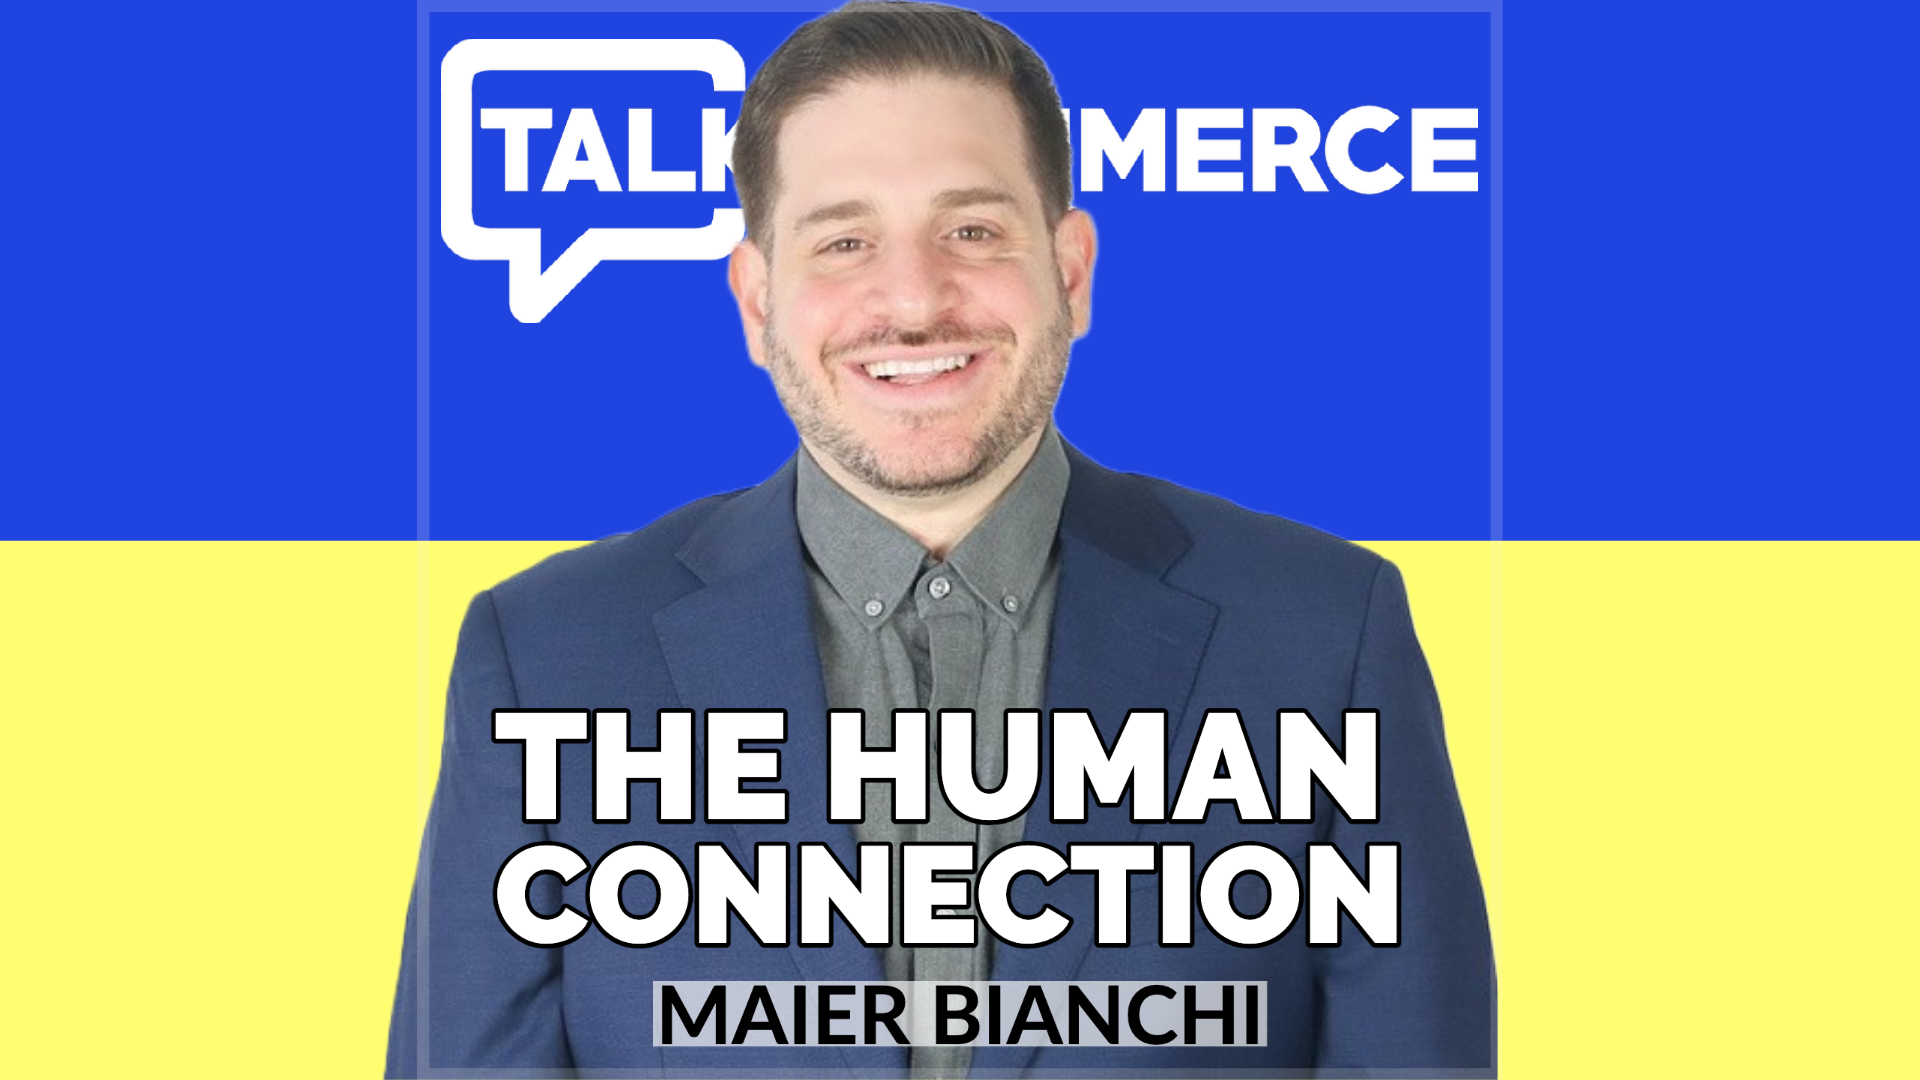 Talk Commerce MAIER BIANCHI